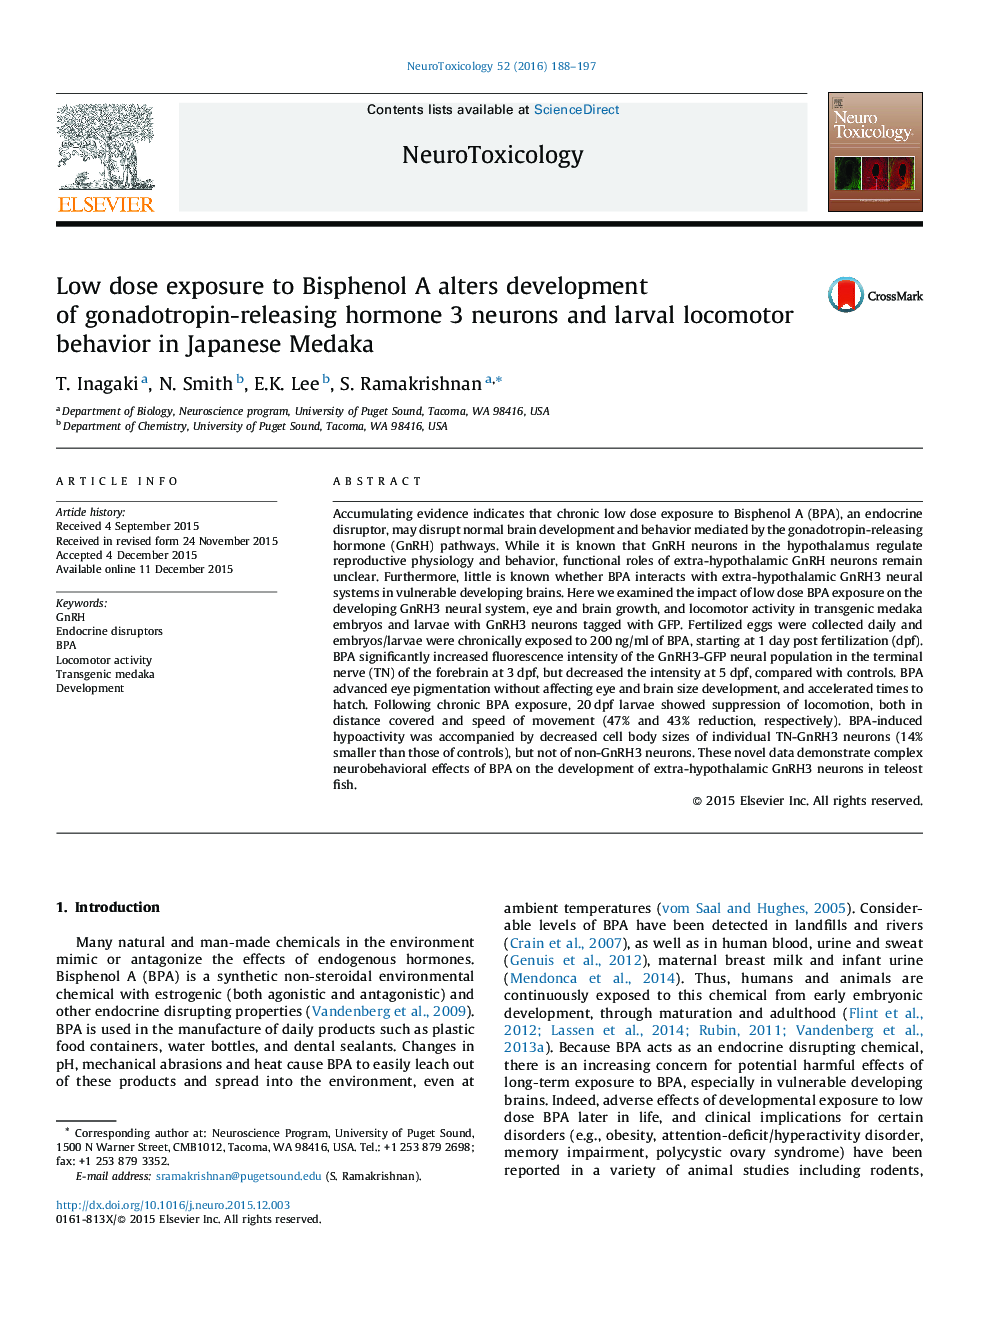 Low dose exposure to Bisphenol A alters development of gonadotropin-releasing hormone 3 neurons and larval locomotor behavior in Japanese Medaka